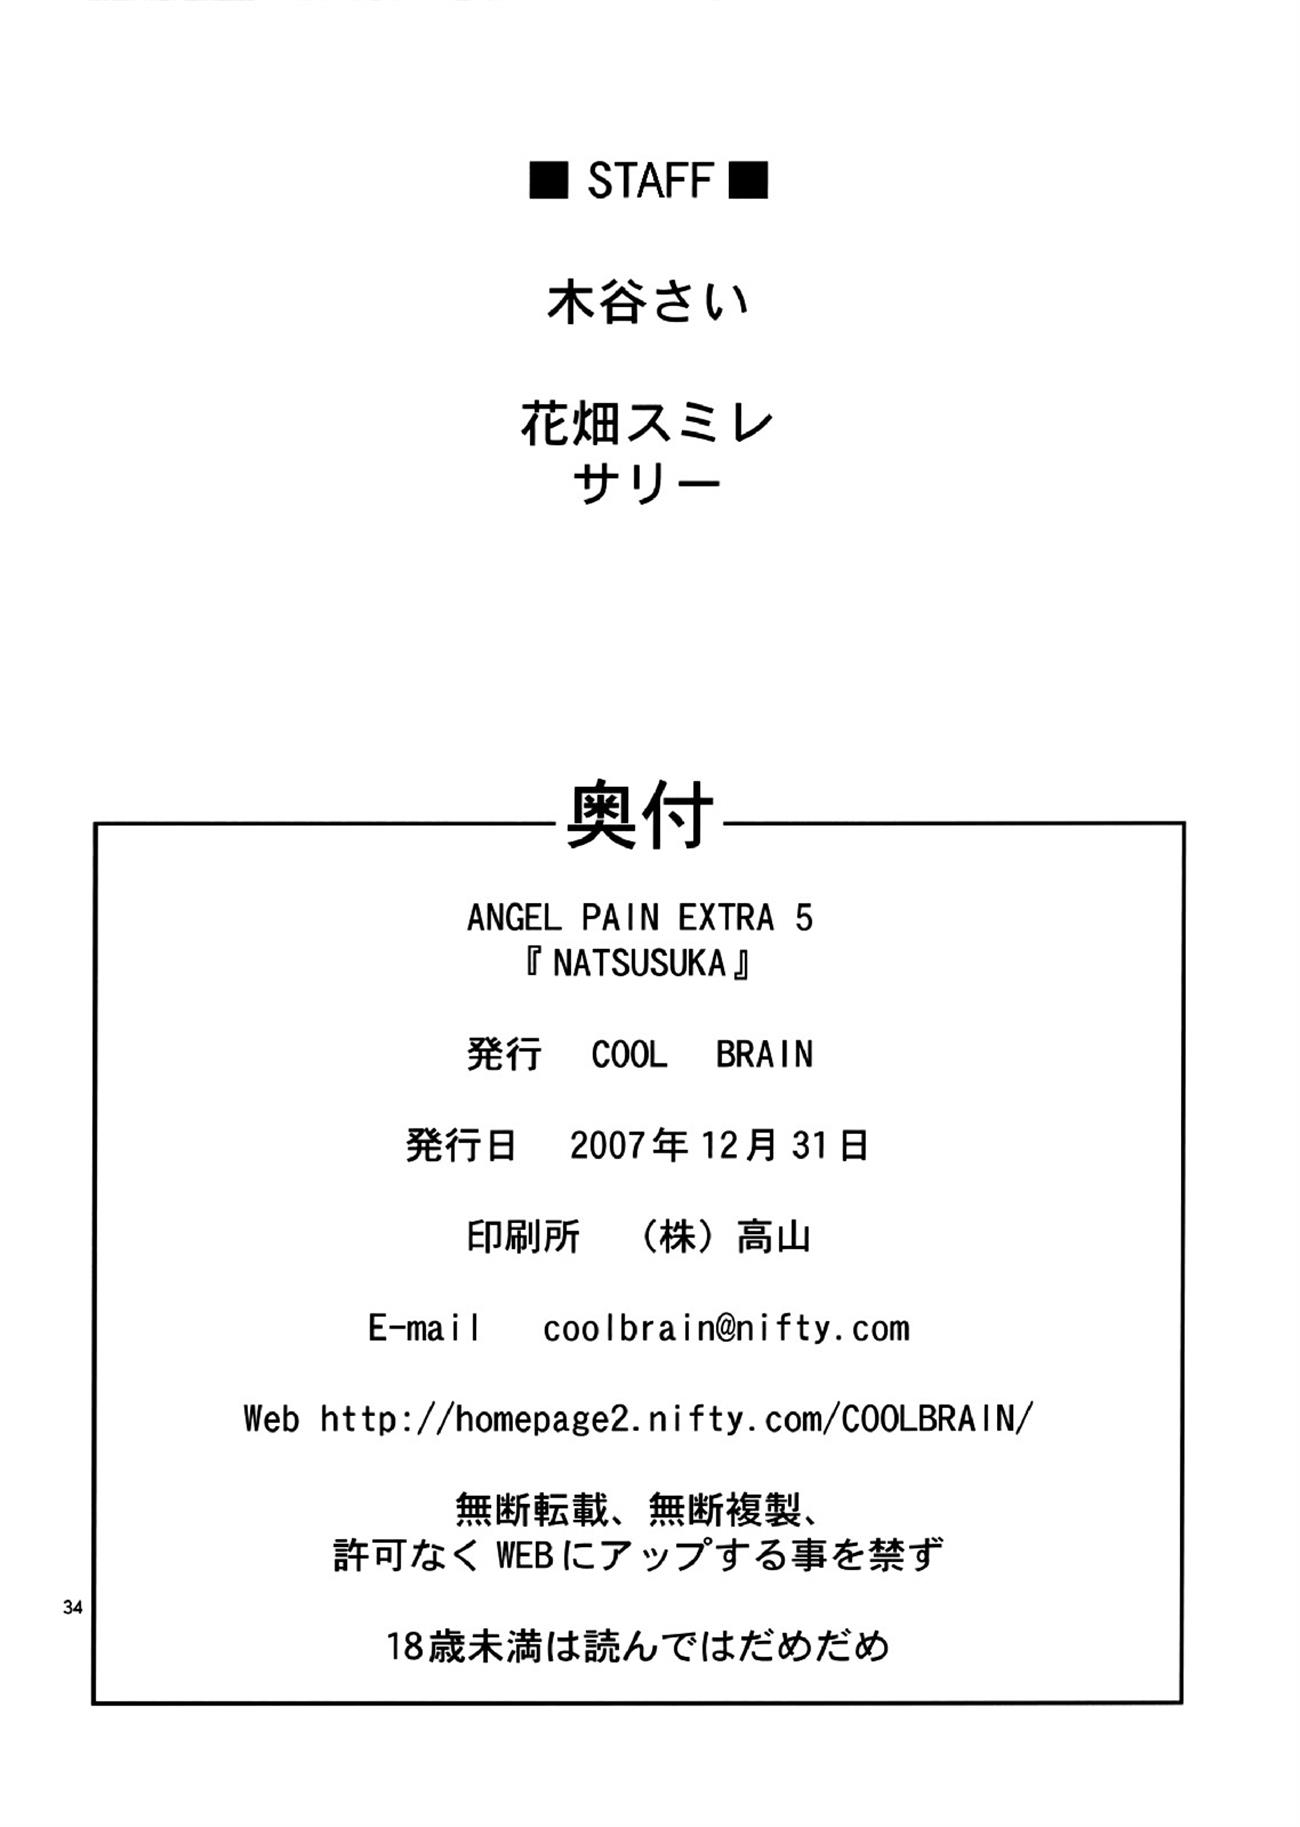 Angel Pain Exra 5- Natsutsuka